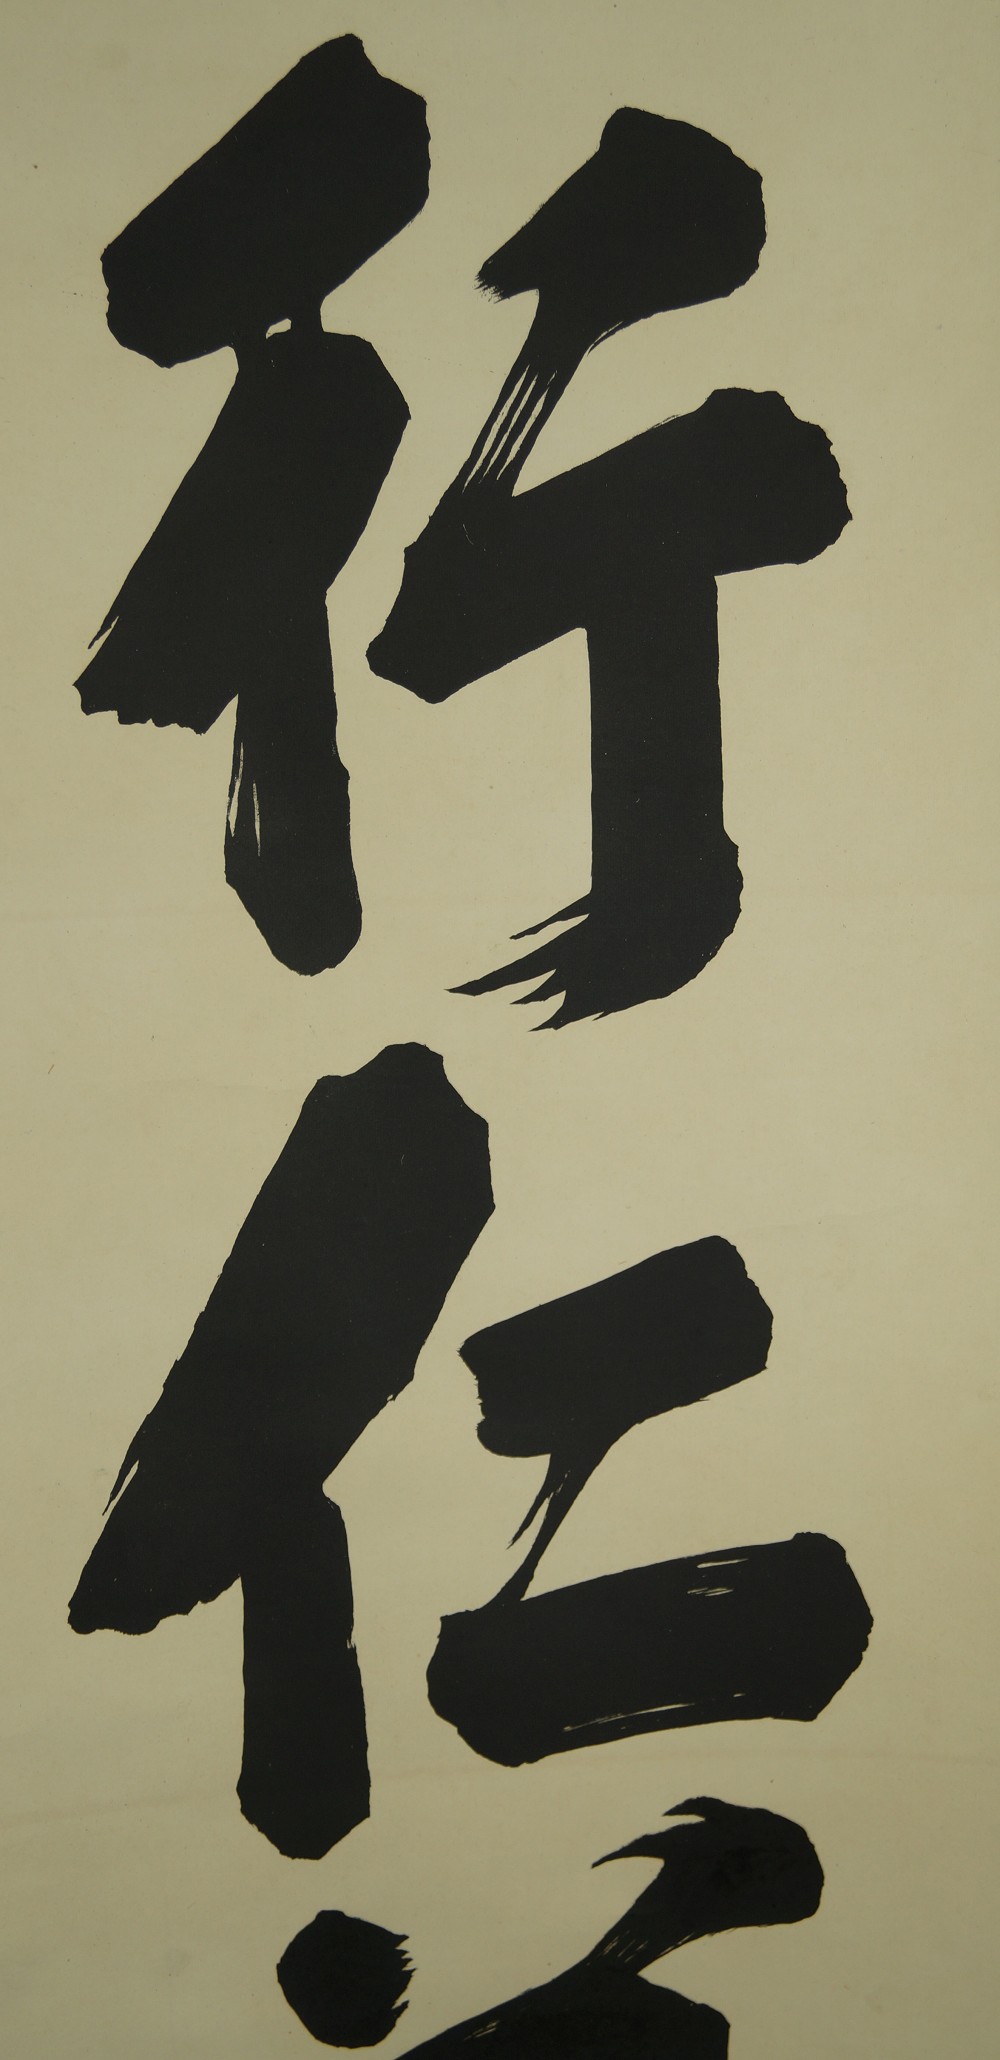 Kalligrafie Druck - Japanisches Rollbild (Kakejiku, Kakemono)